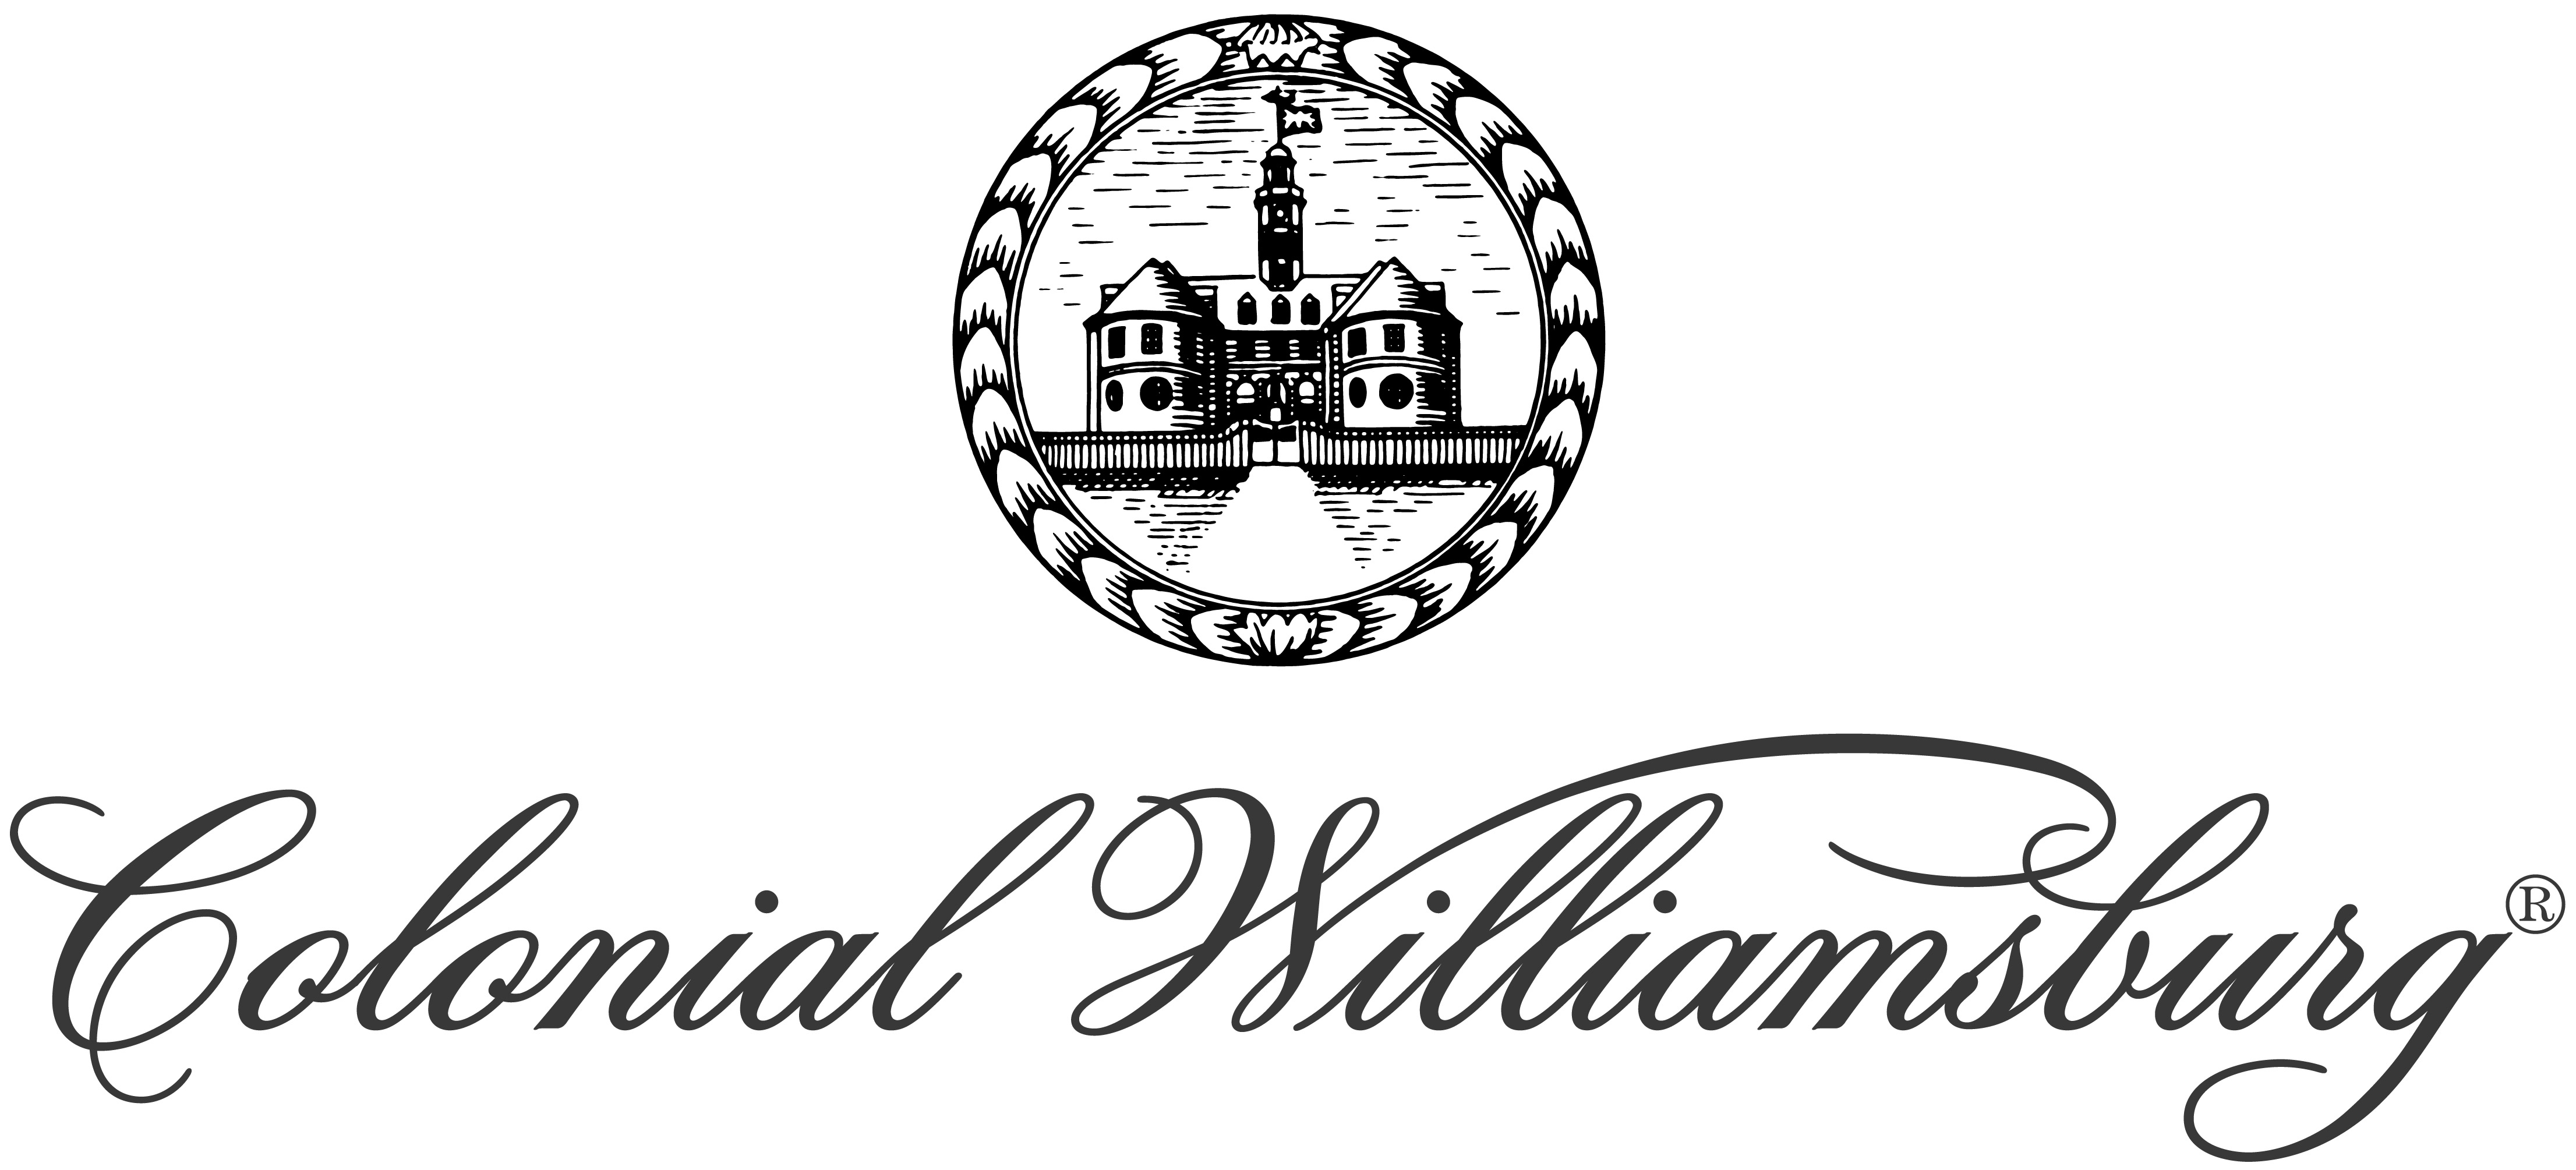 Veteran's Day discounts 2016 Williamsburg Virginia